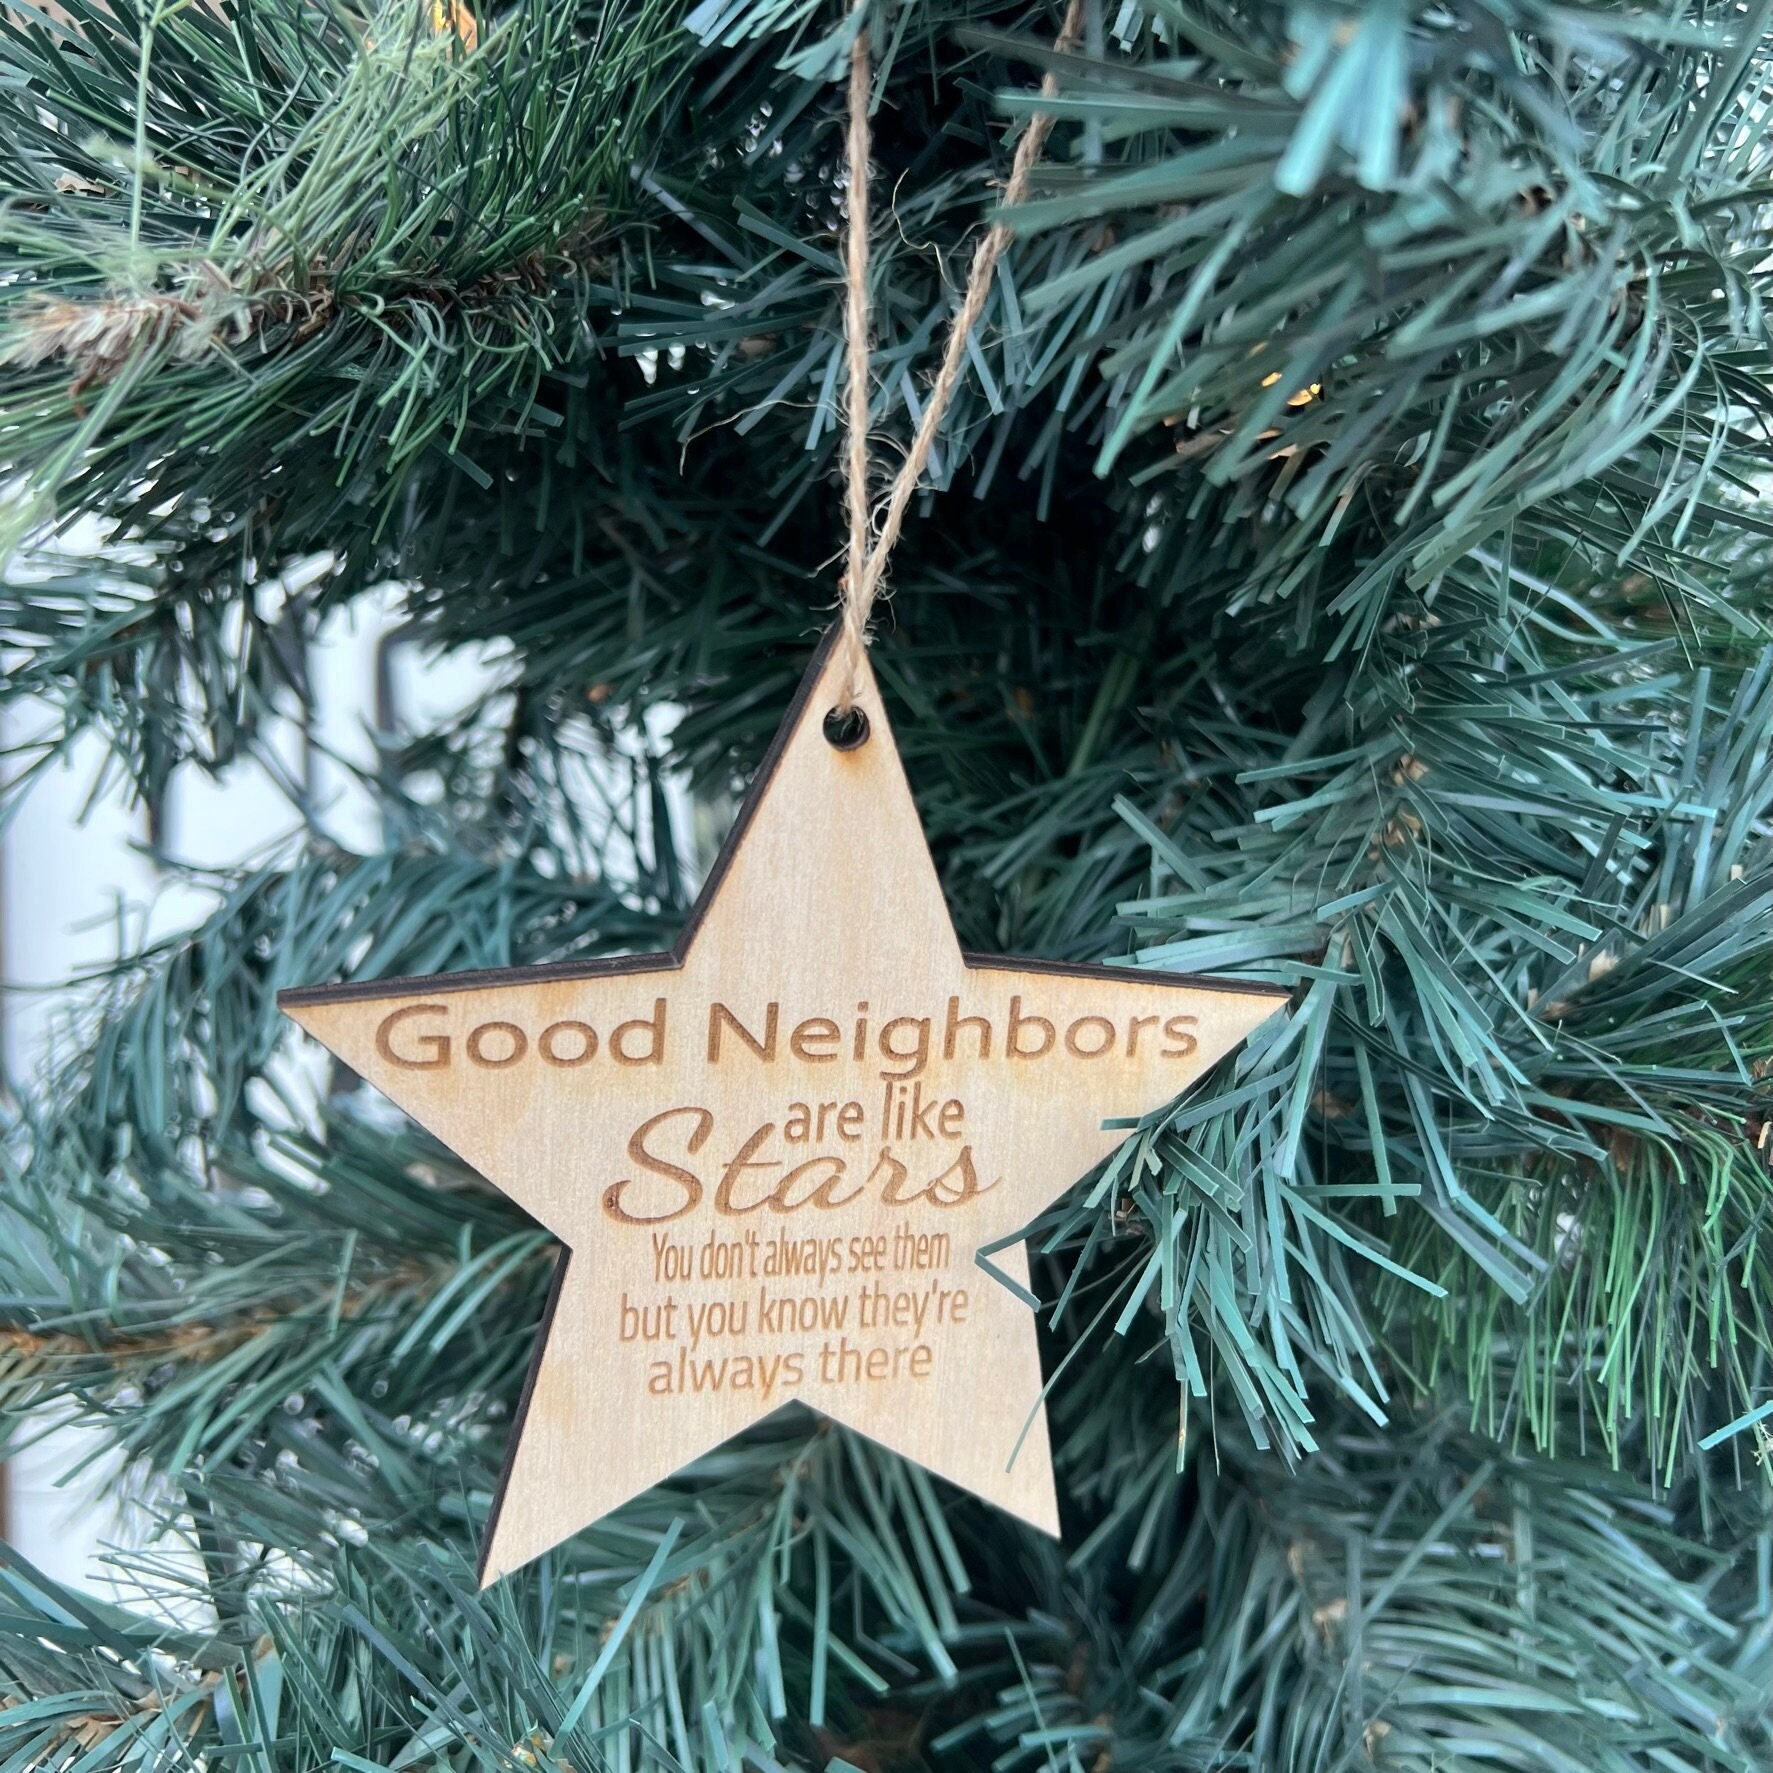 Neighbor Ornament, Good Neighbors Are Like Stars, Star Ornament